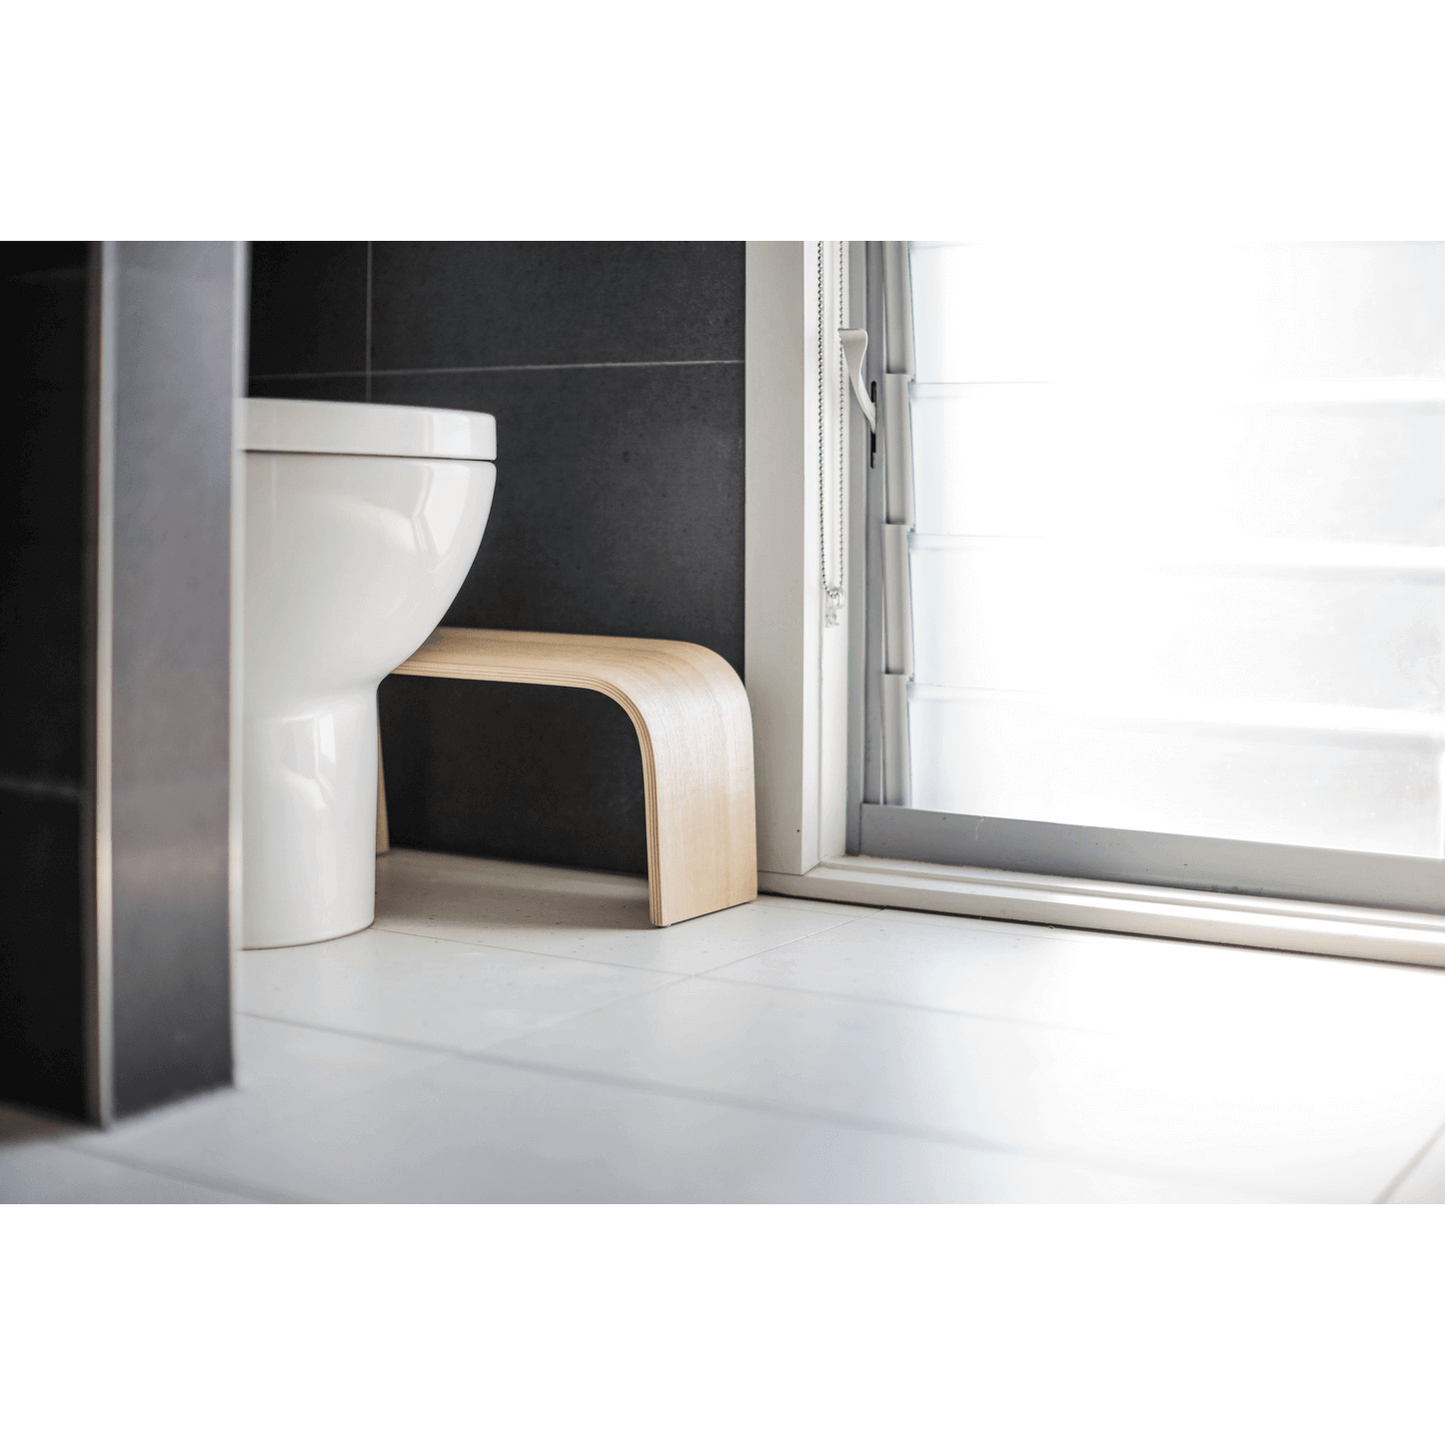 The PROPPR Timber - Tasmanian Oak Toilet Foot Stool - side view in a bathroom beside a toilet